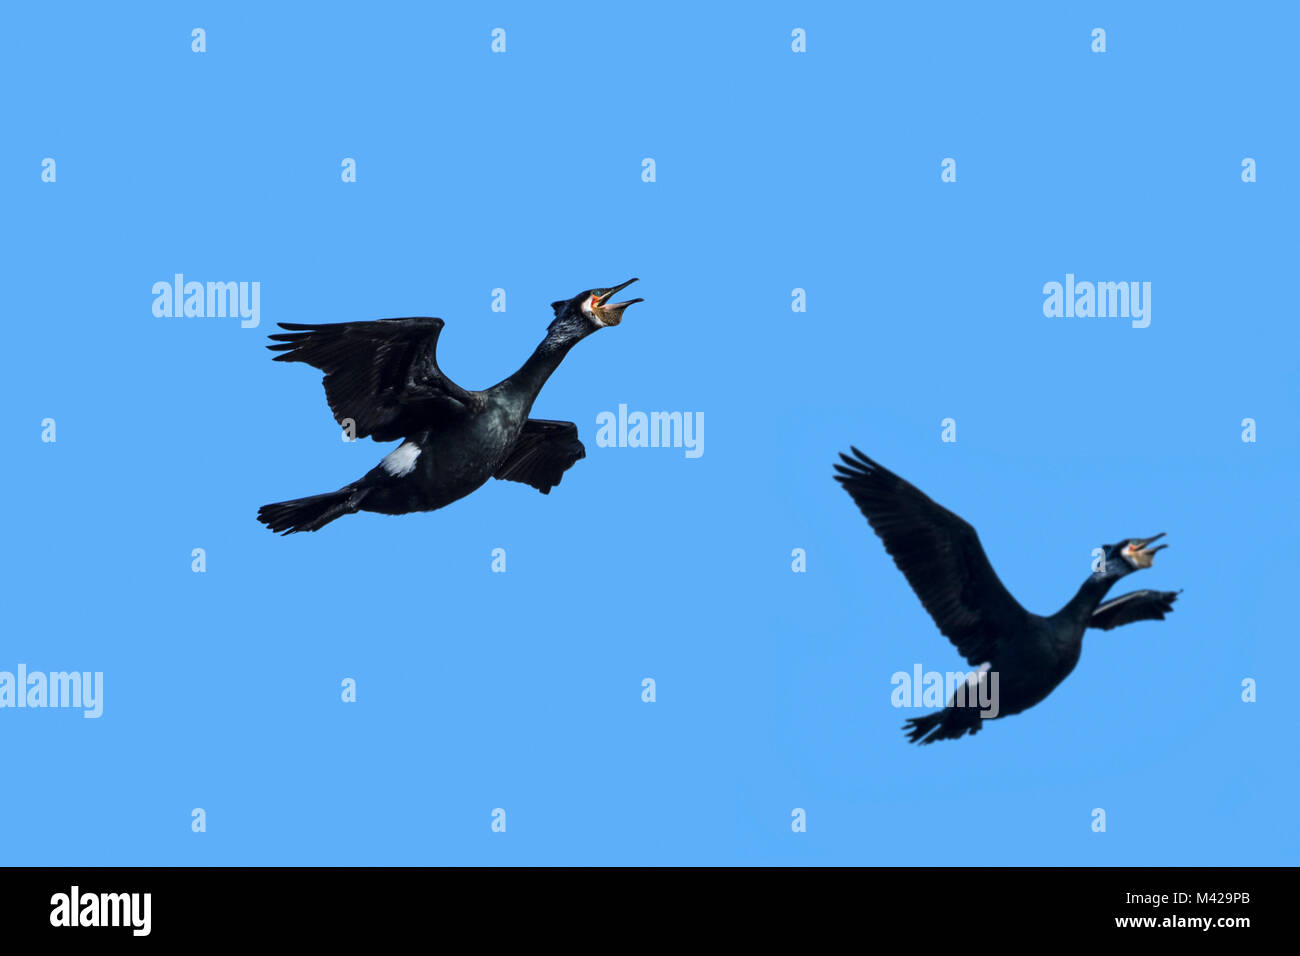 Deux grands cormorans noirs / grands cormorans (Phalacrocorax carbo) en plumage nuptial appelant en vol sur fond de ciel bleu à la fin de l'hiver Banque D'Images